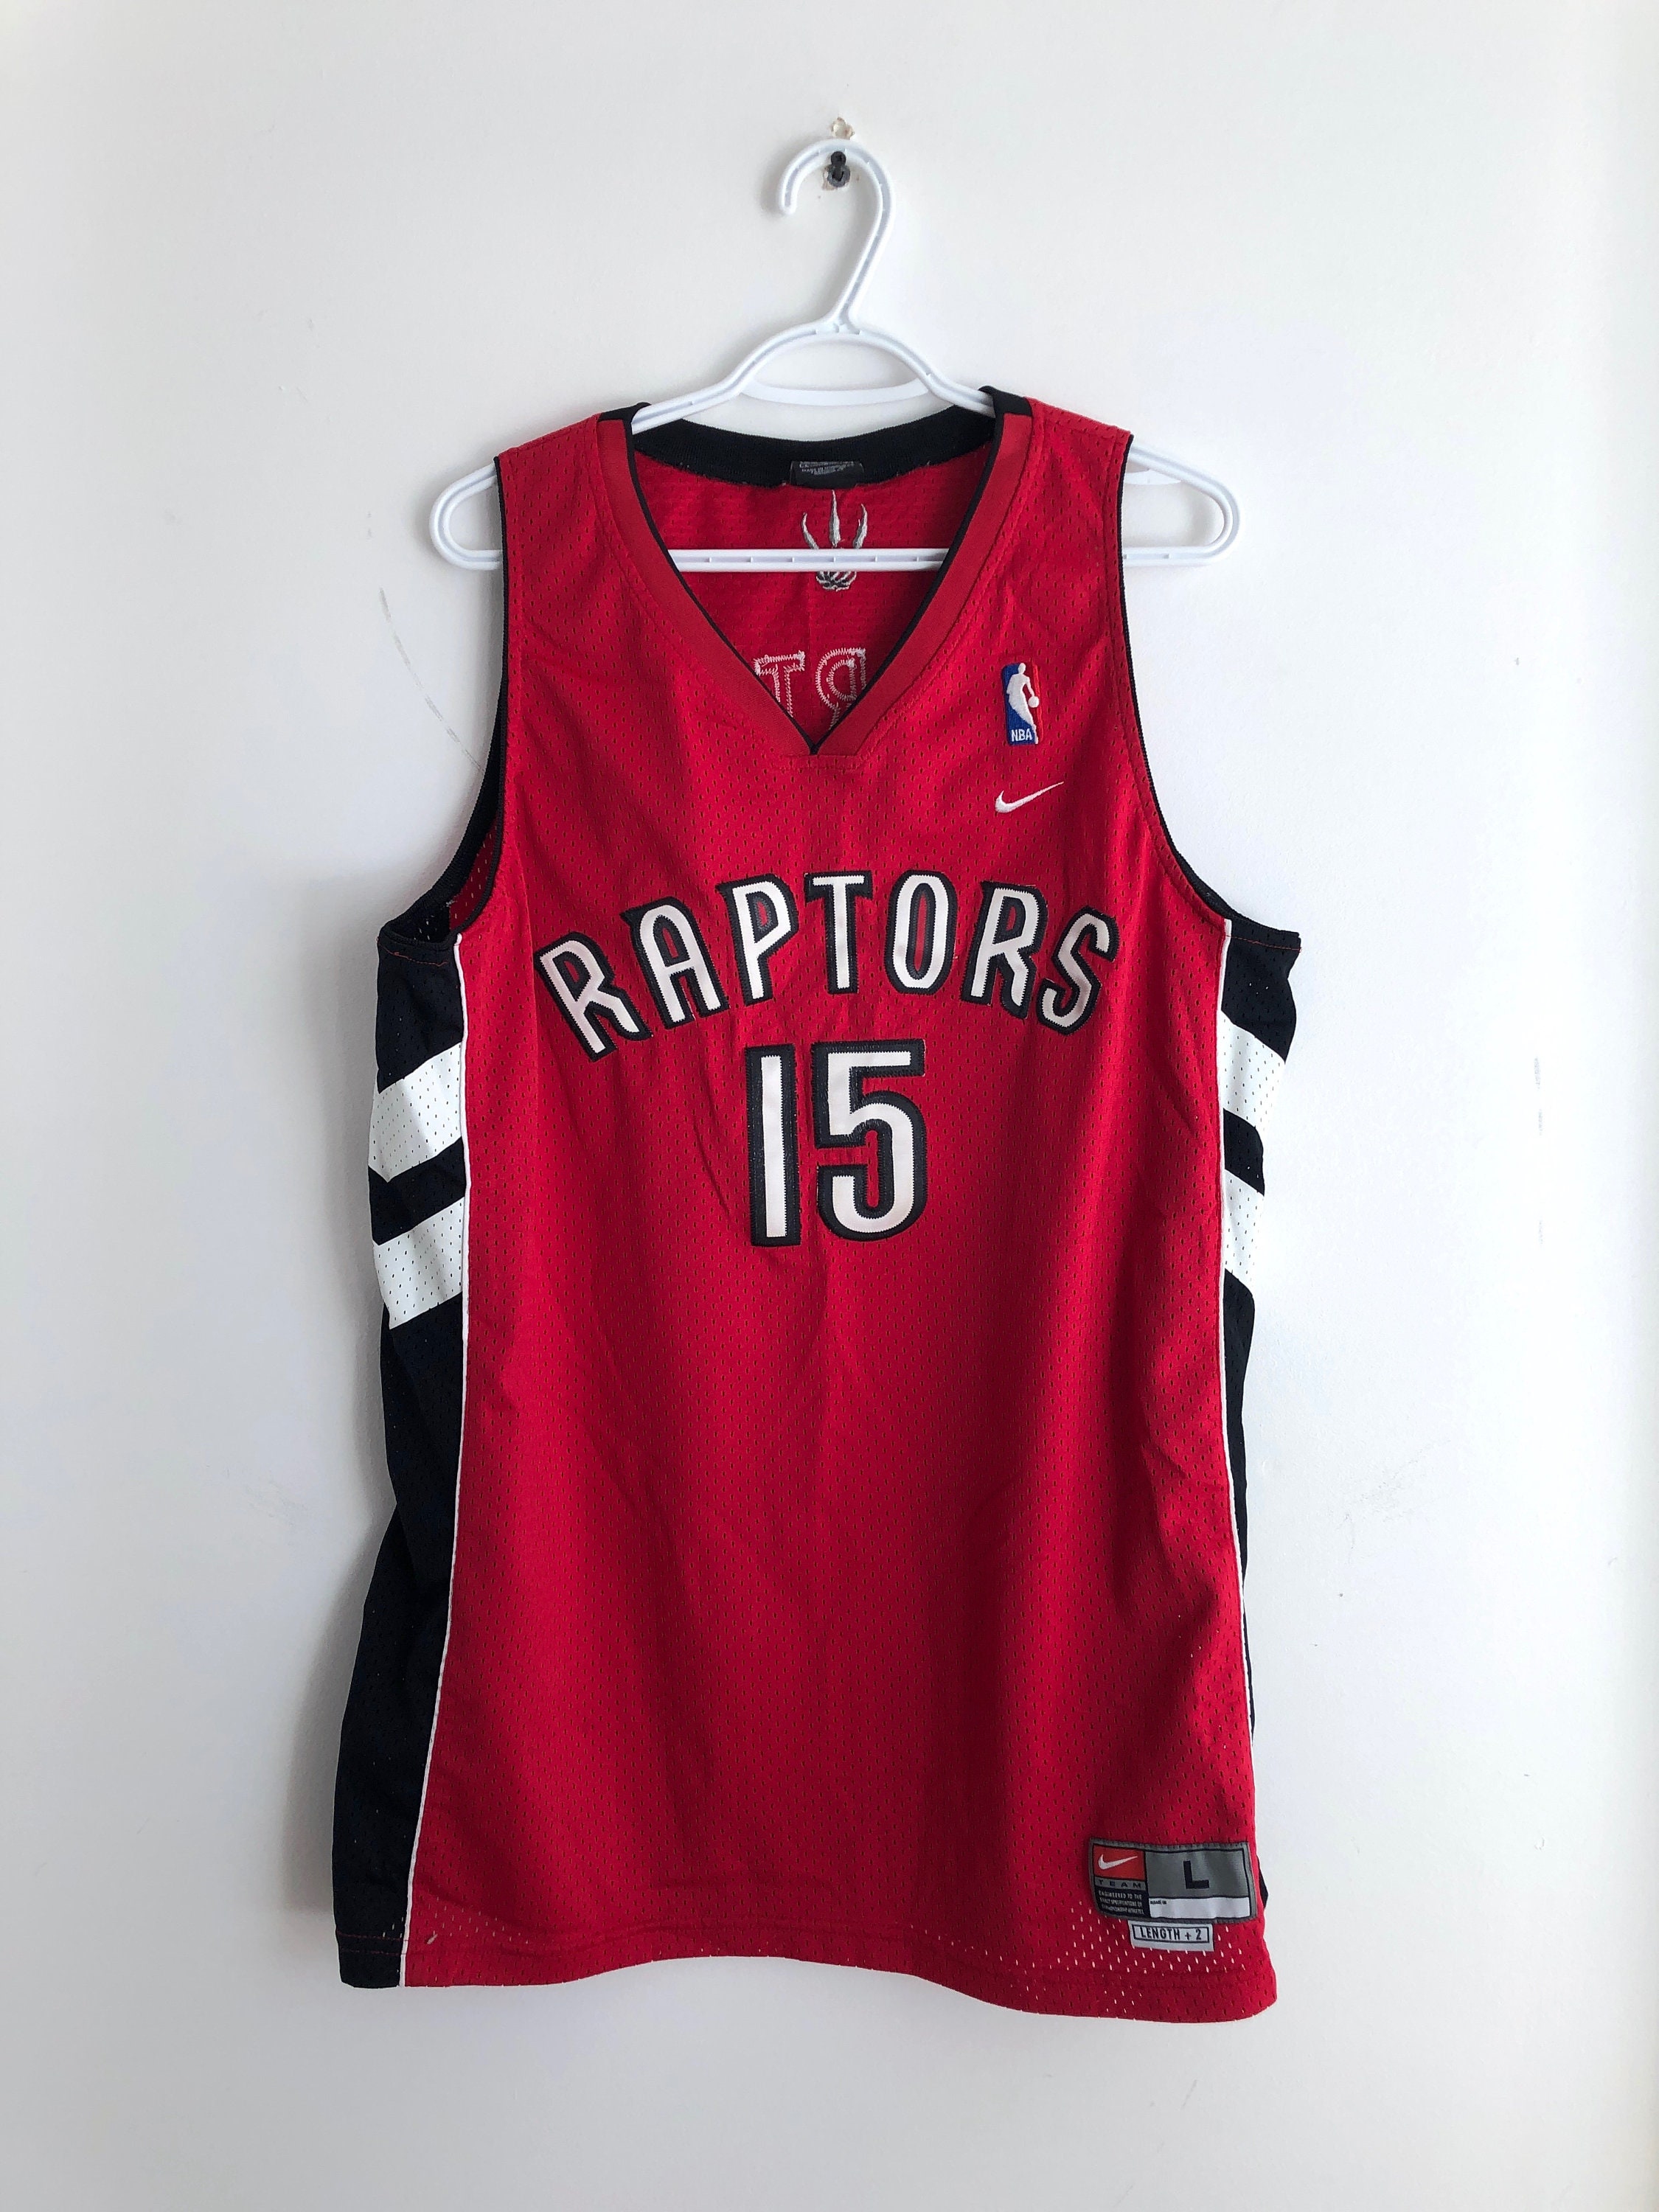 Vintage Nike Toronto Raptors Vince Carter Swingman NB… - Gem